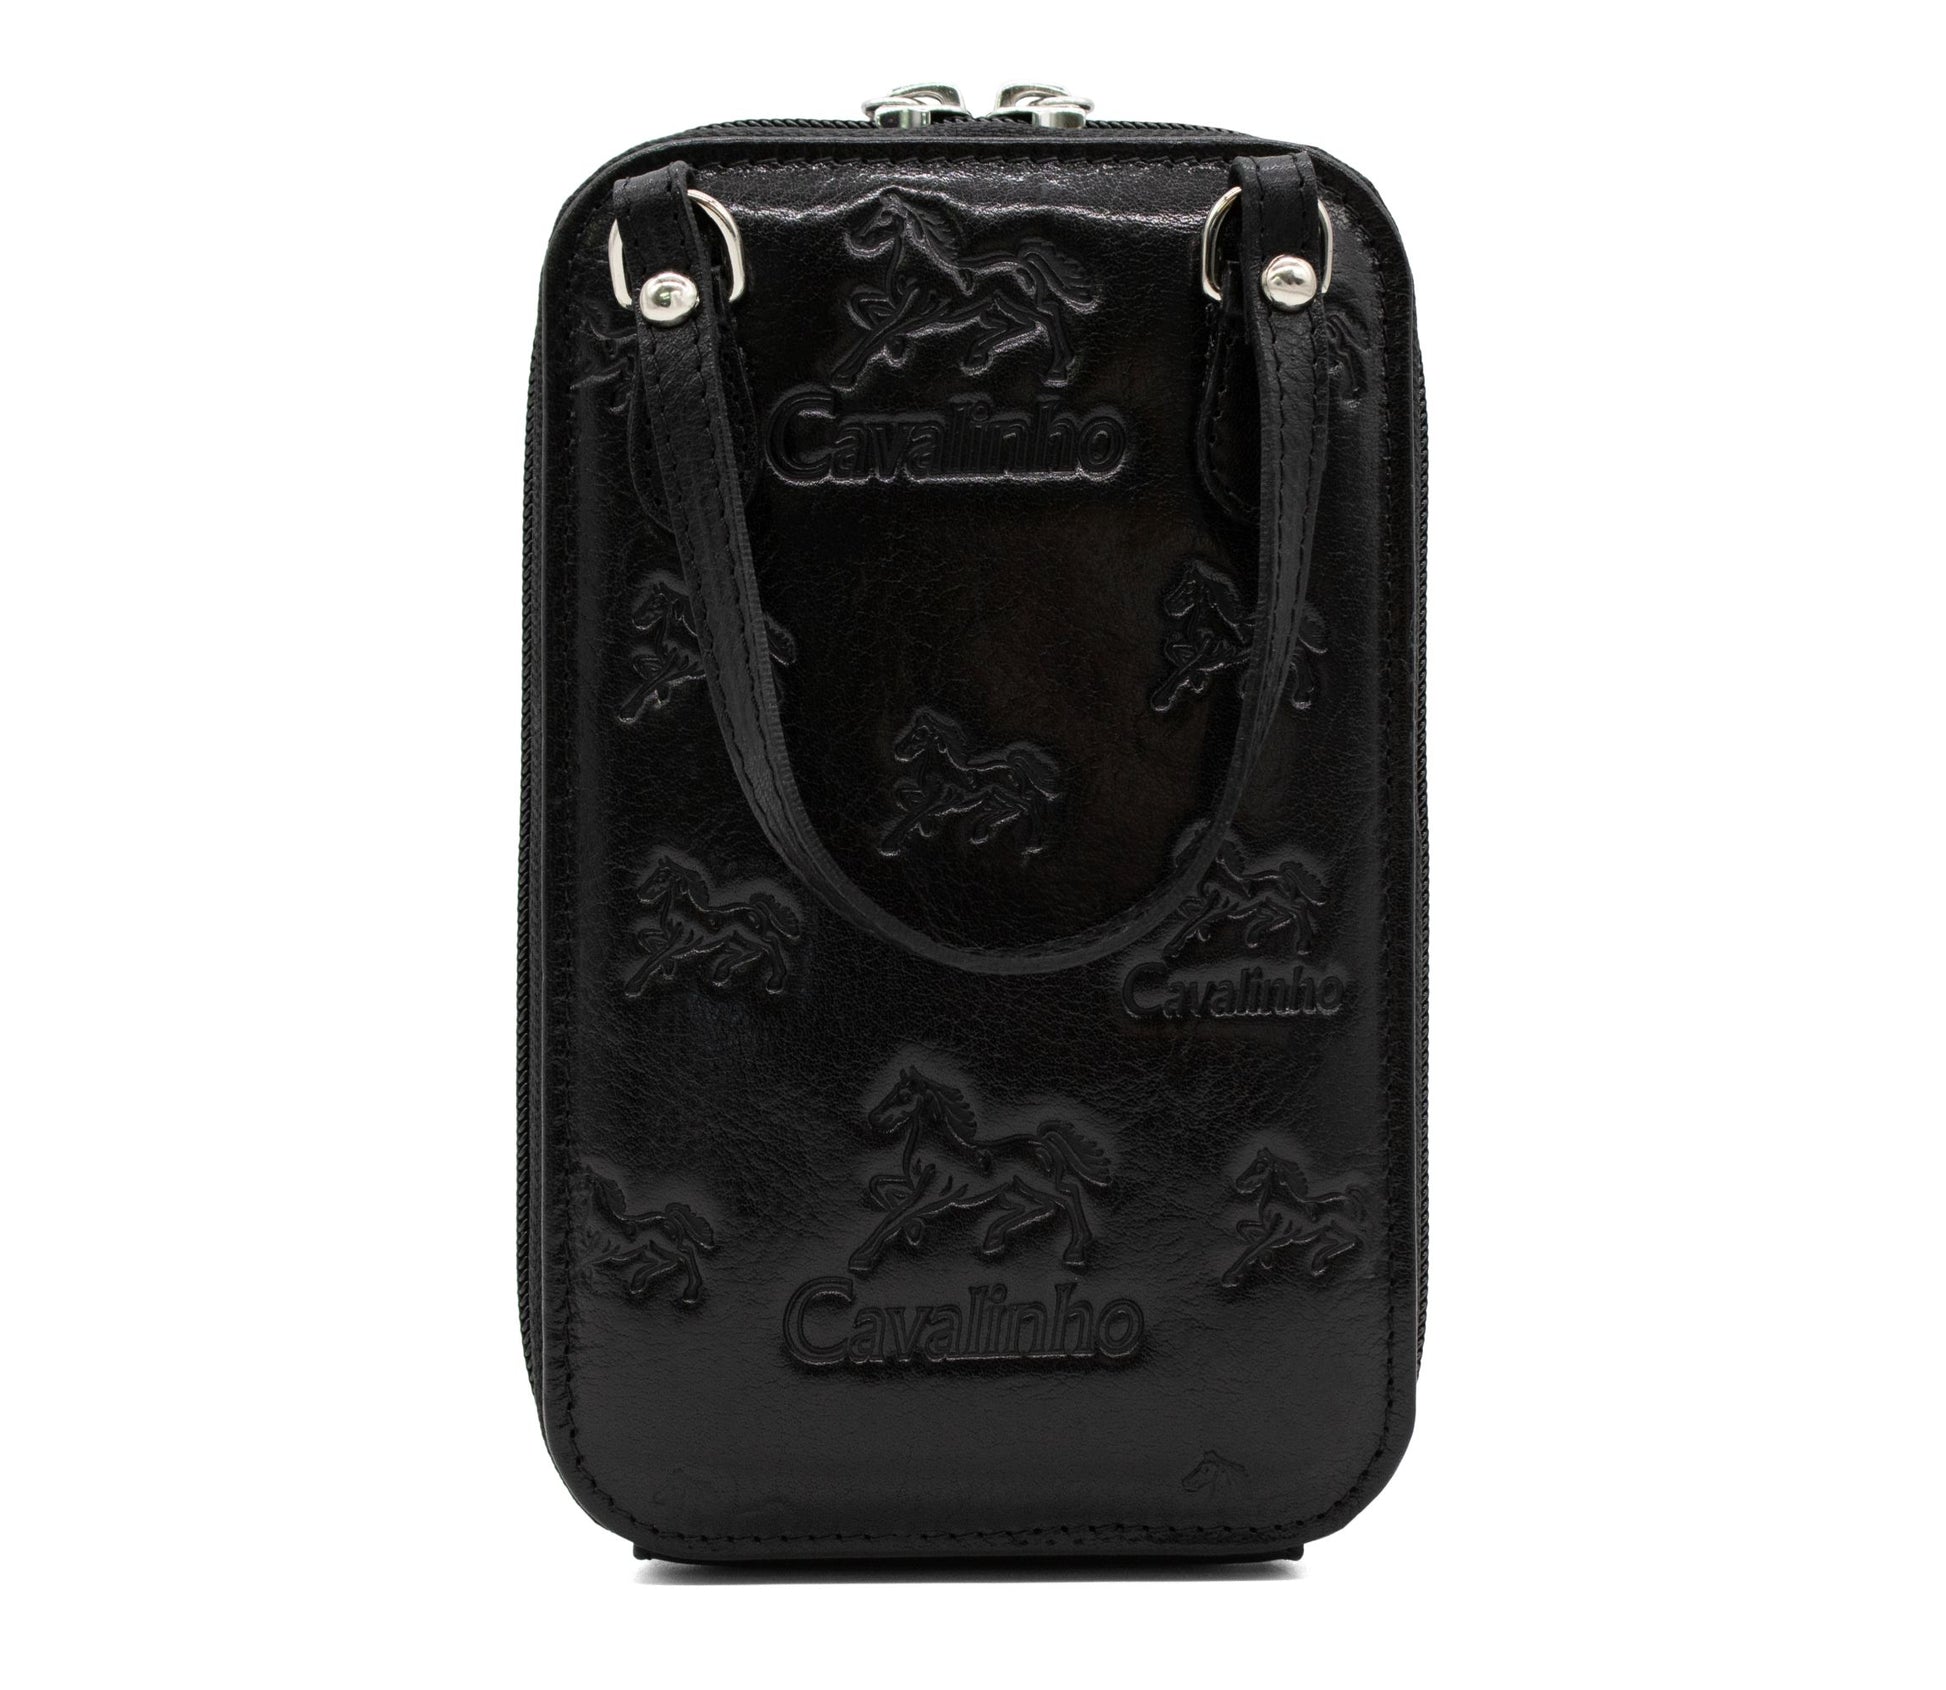 Cavalinho Cavalo Lusitano Leather Phone Purse - Black - 28090278.01_3